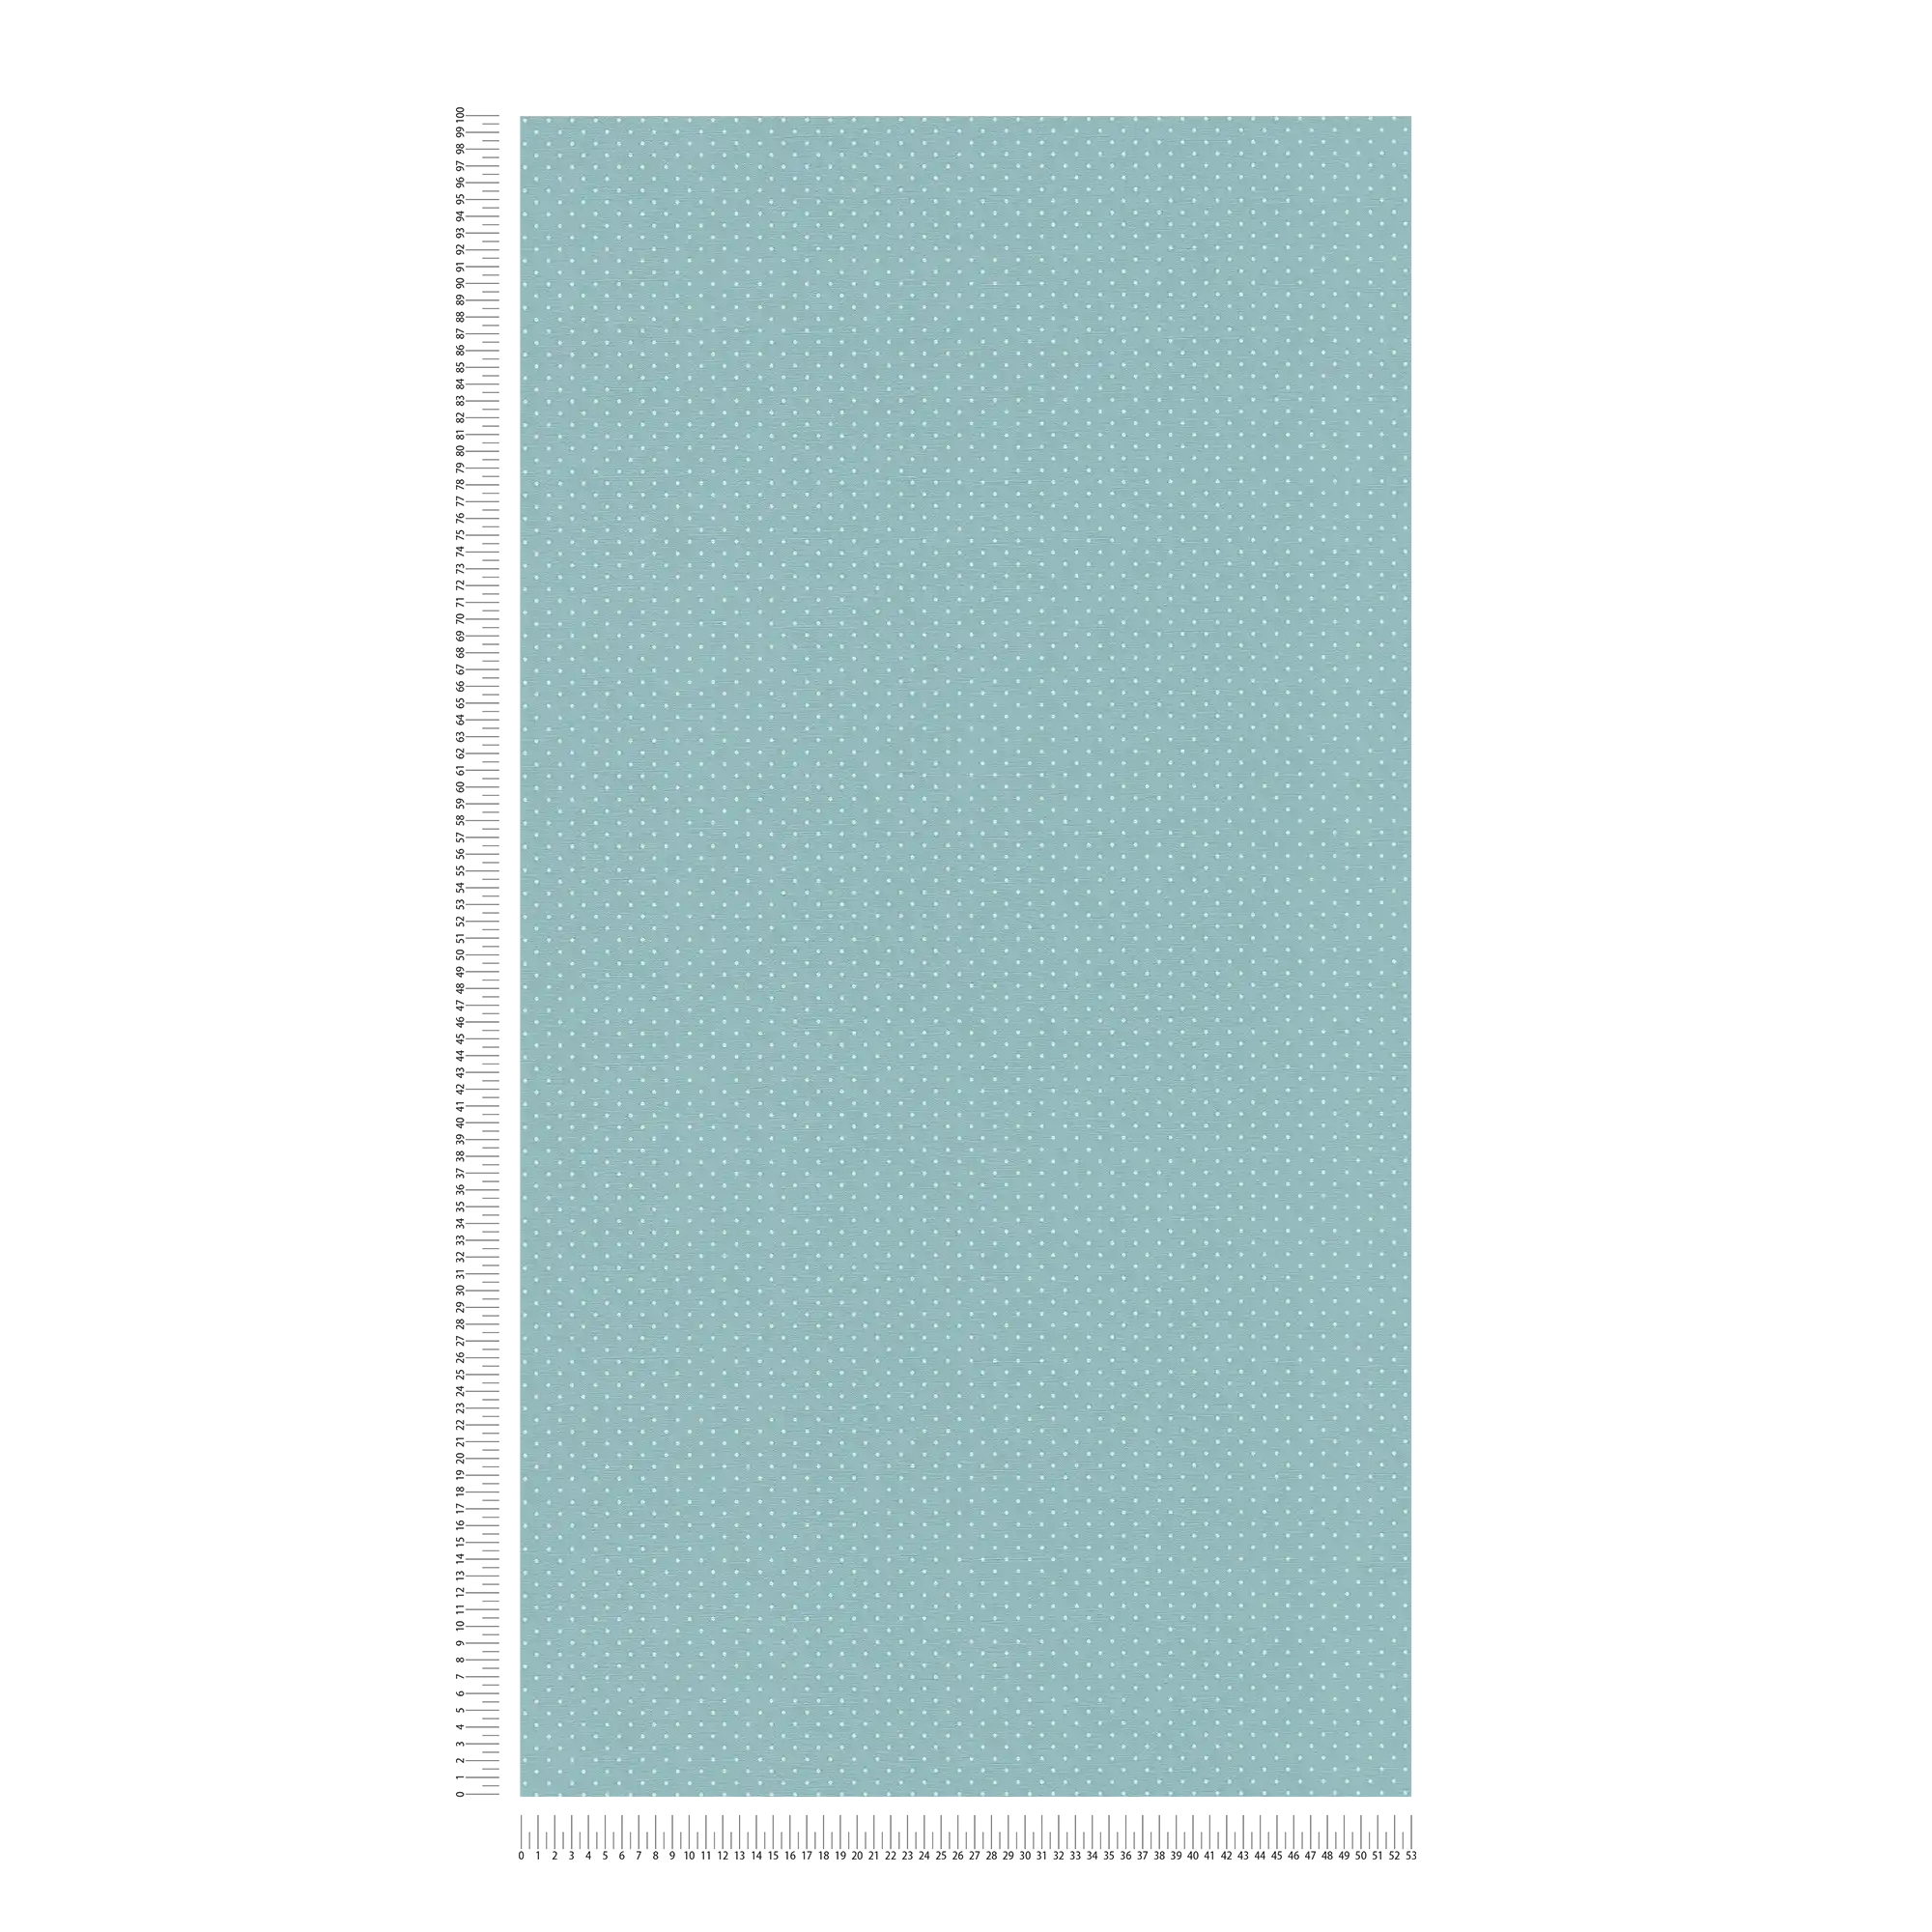             Vliesbehang met klein stippenpatroon - blauw, wit
        